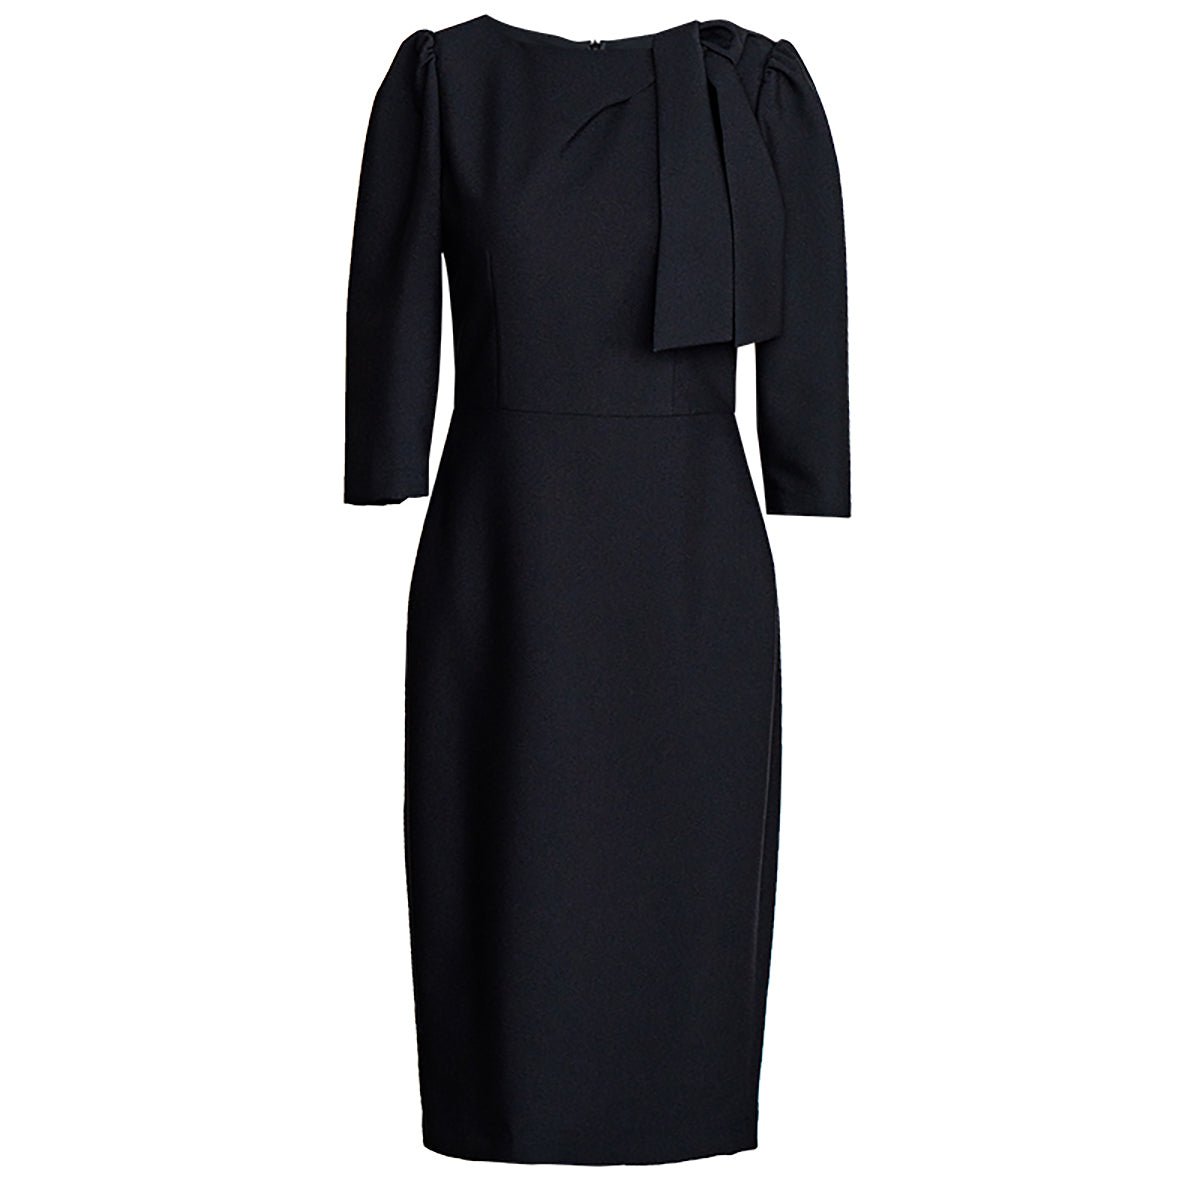 Pretty Knee-Length Black Dress - 0cm